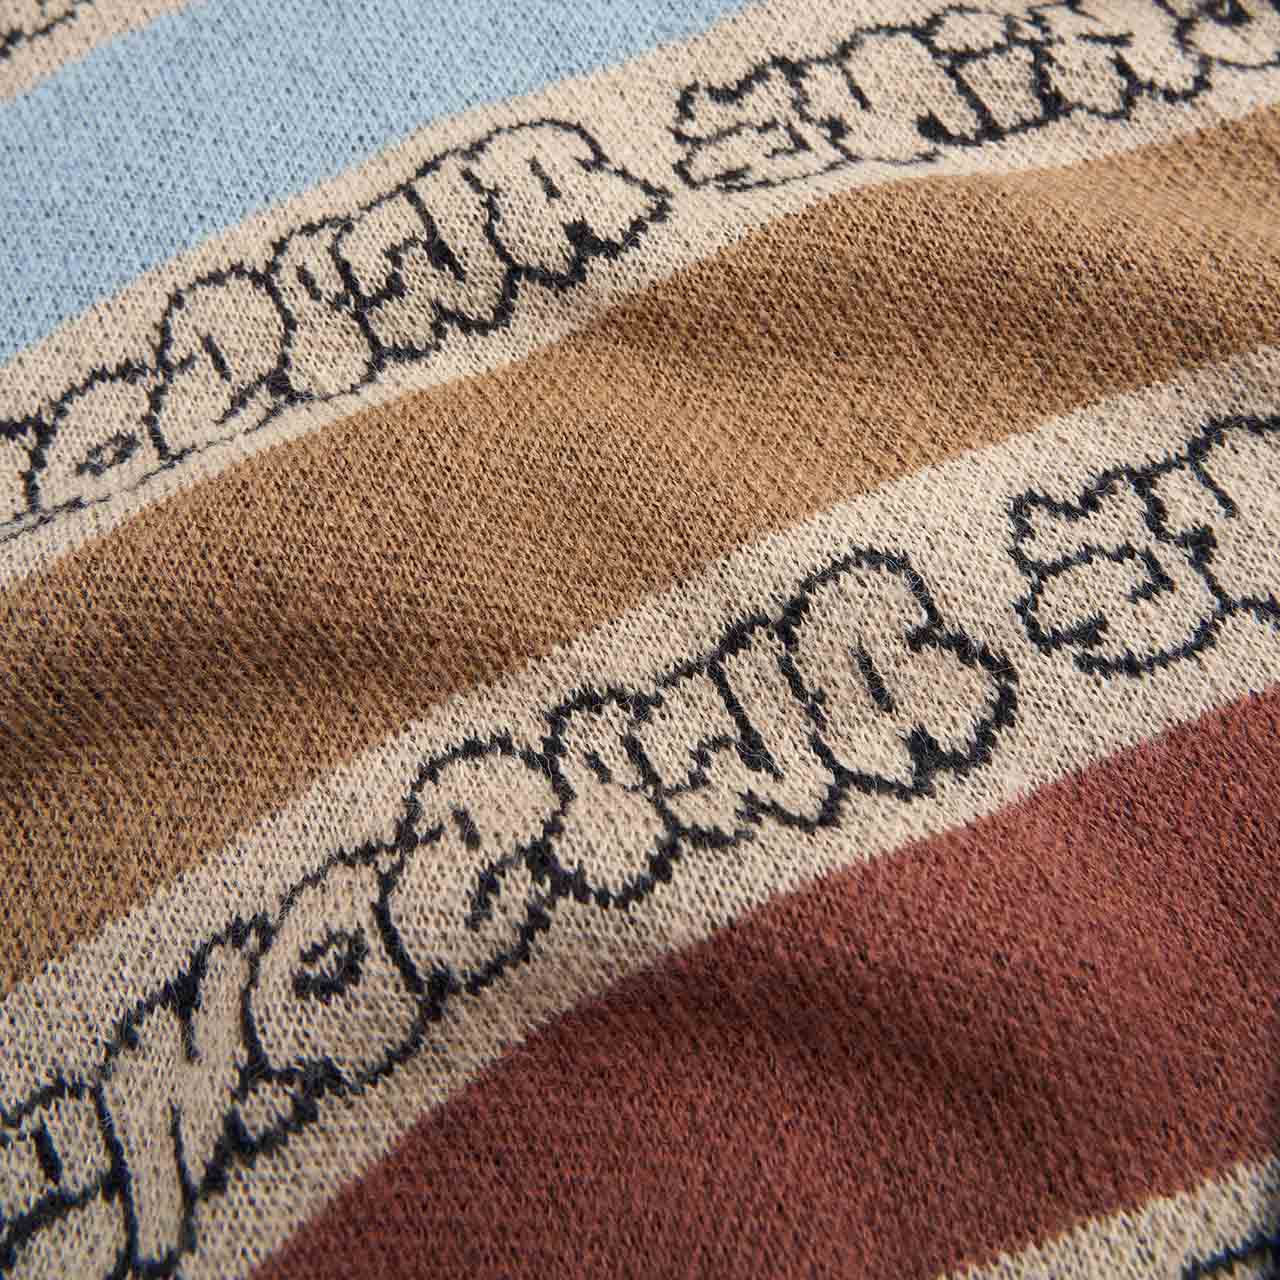 Brushed Jacquard Sweater in Brown/Multi